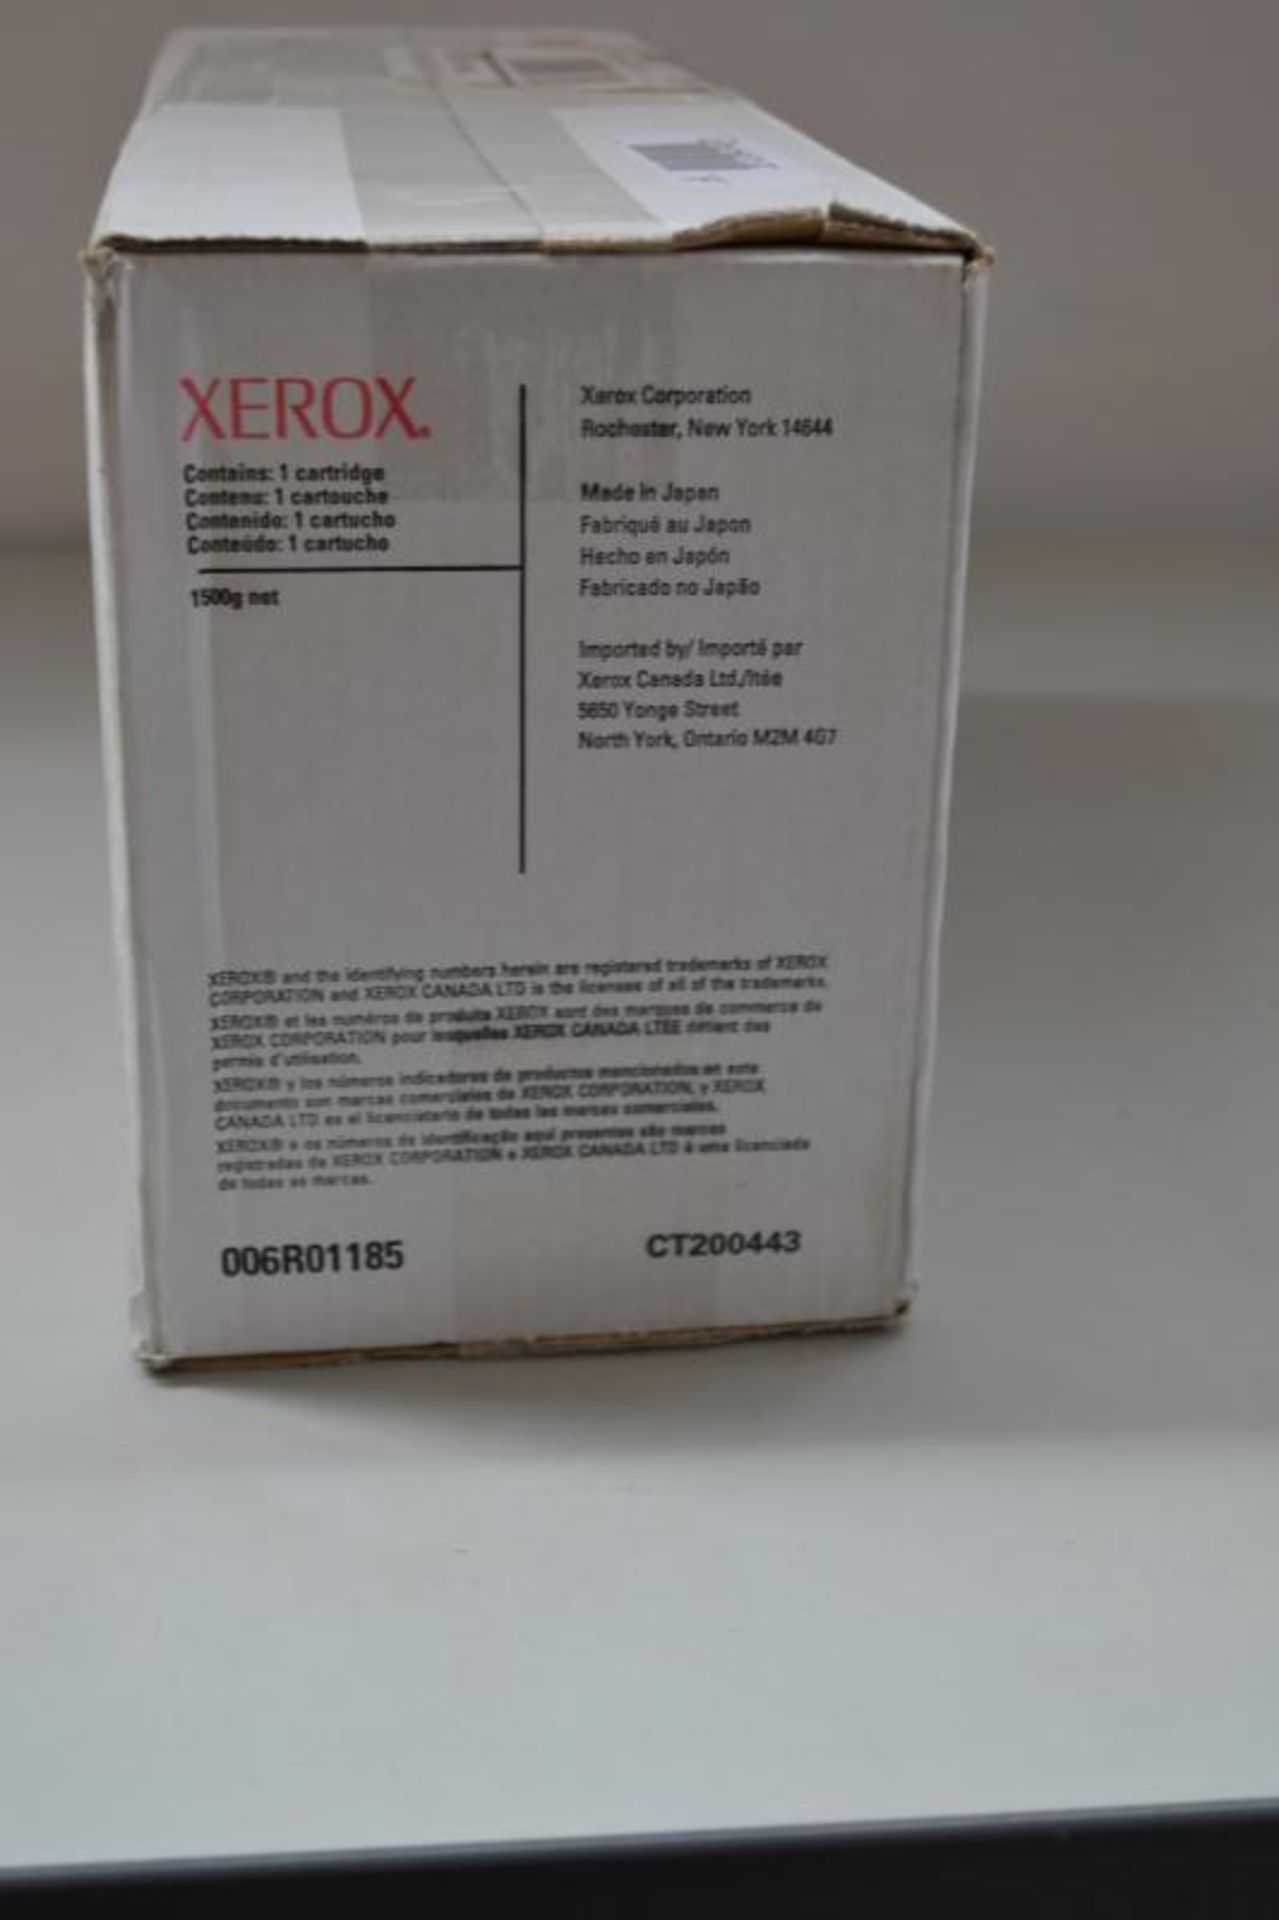 1 x Xerox 006R01185 Black Printer Toner Cartridge for 6030/6050 - New In Box - Ref J2199 - CL394 - L - Image 3 of 3